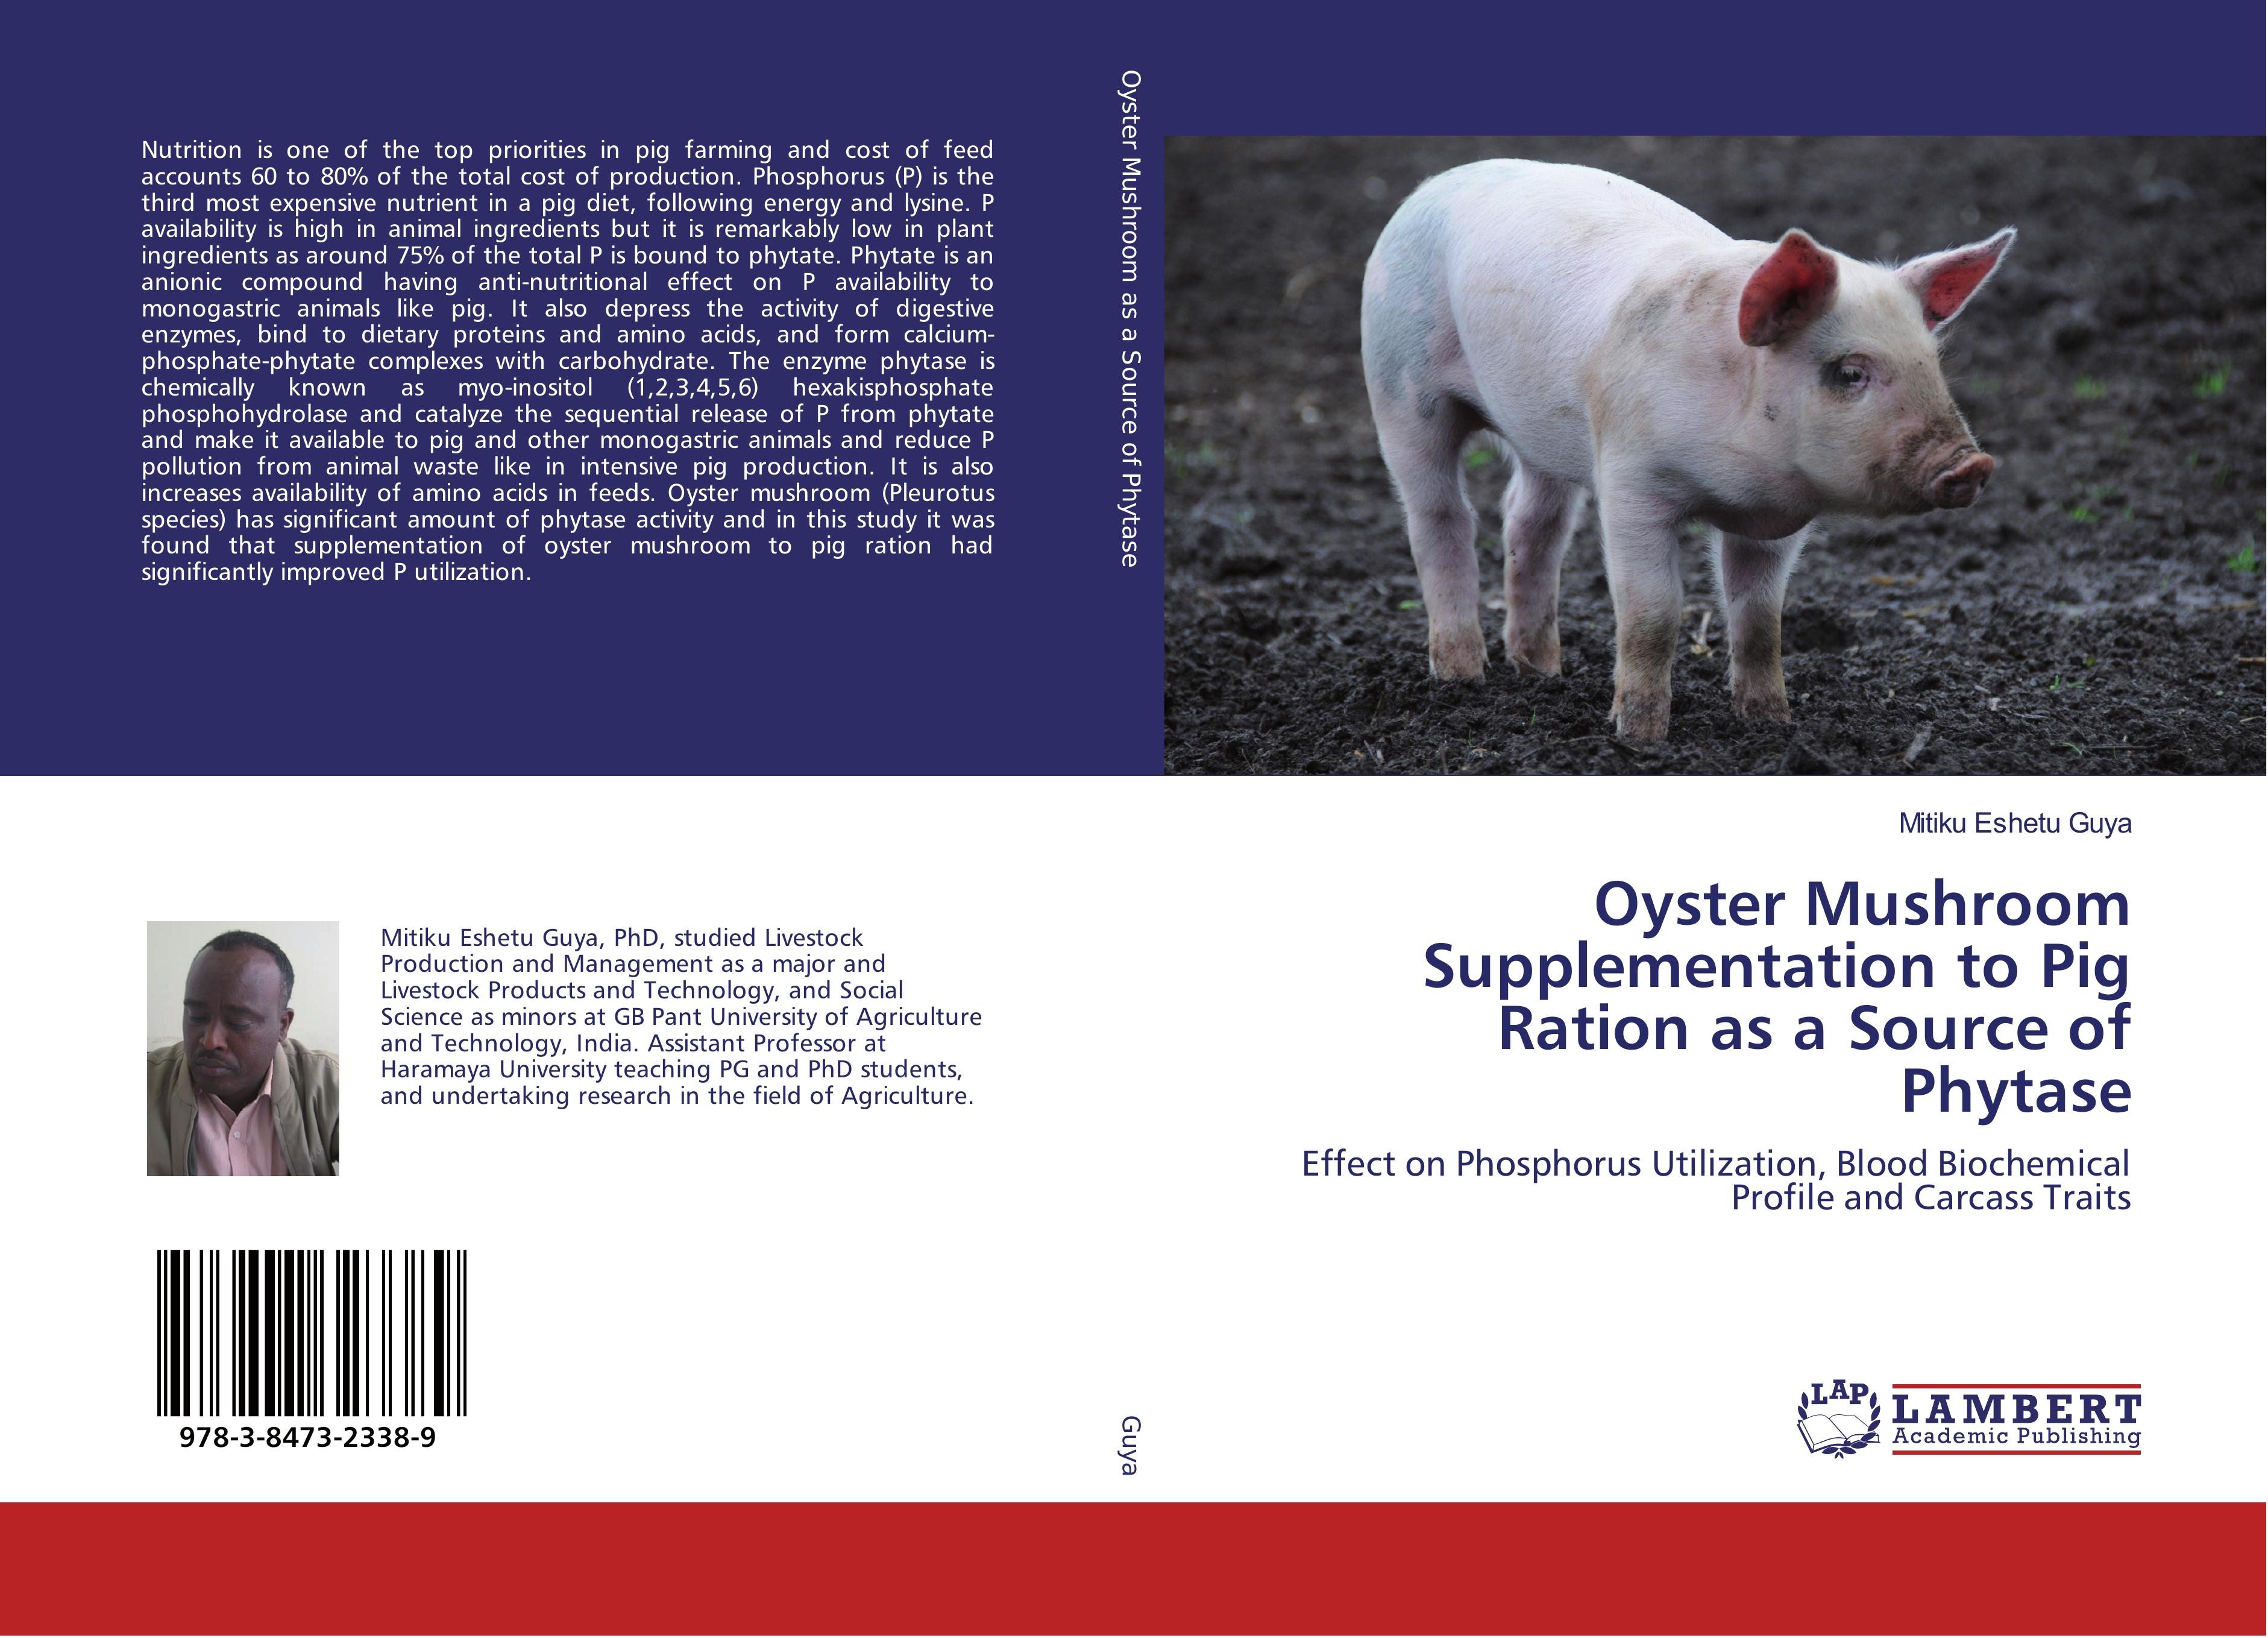 Oyster Mushroom Supplementation to Pig Ration as a Source of Phytase - Guya, Mitiku Eshetu